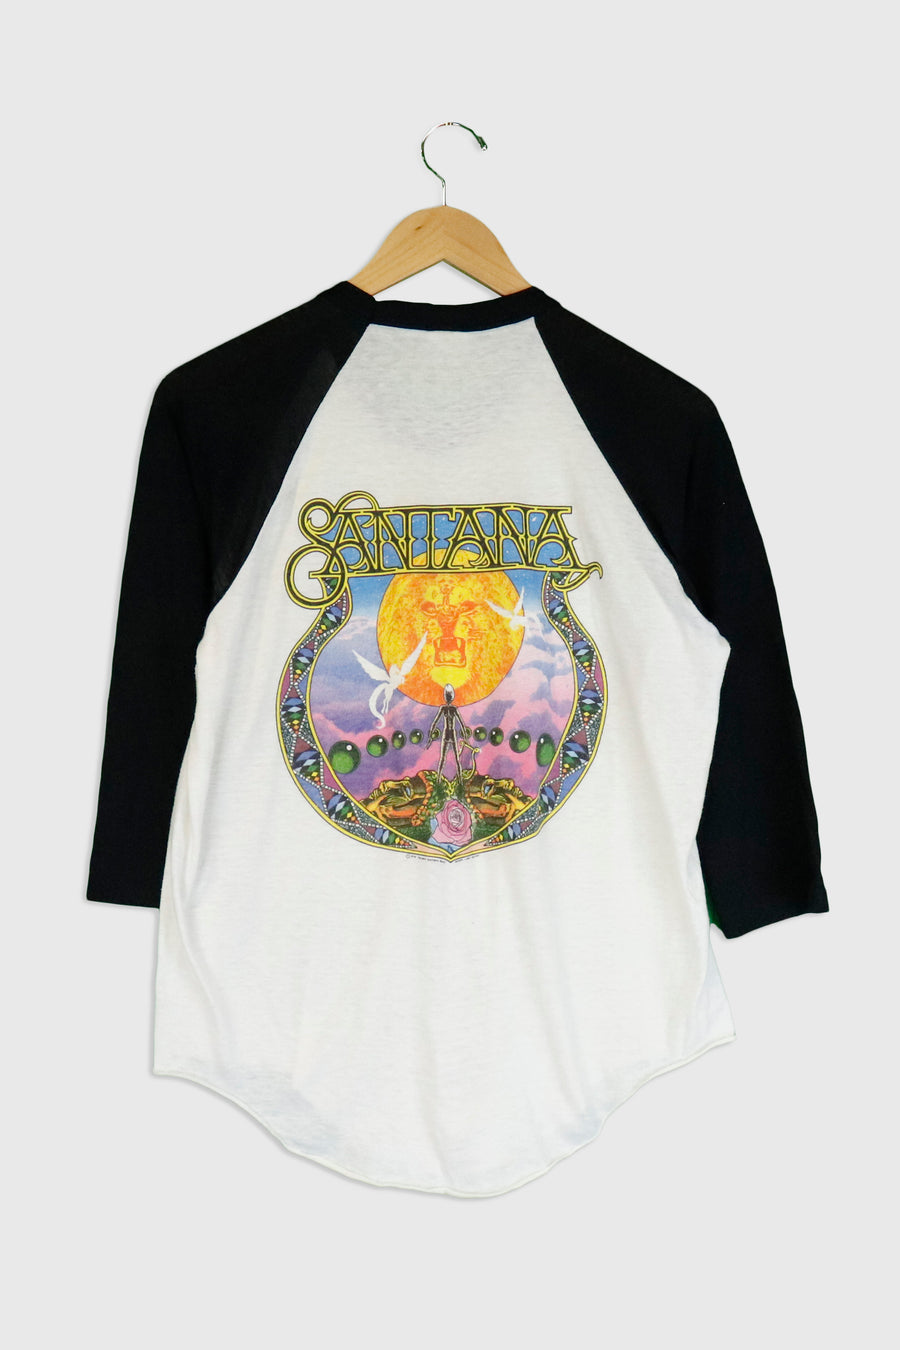 Vintage 1979 Santana Graphic Baseball T Shirt Sz L